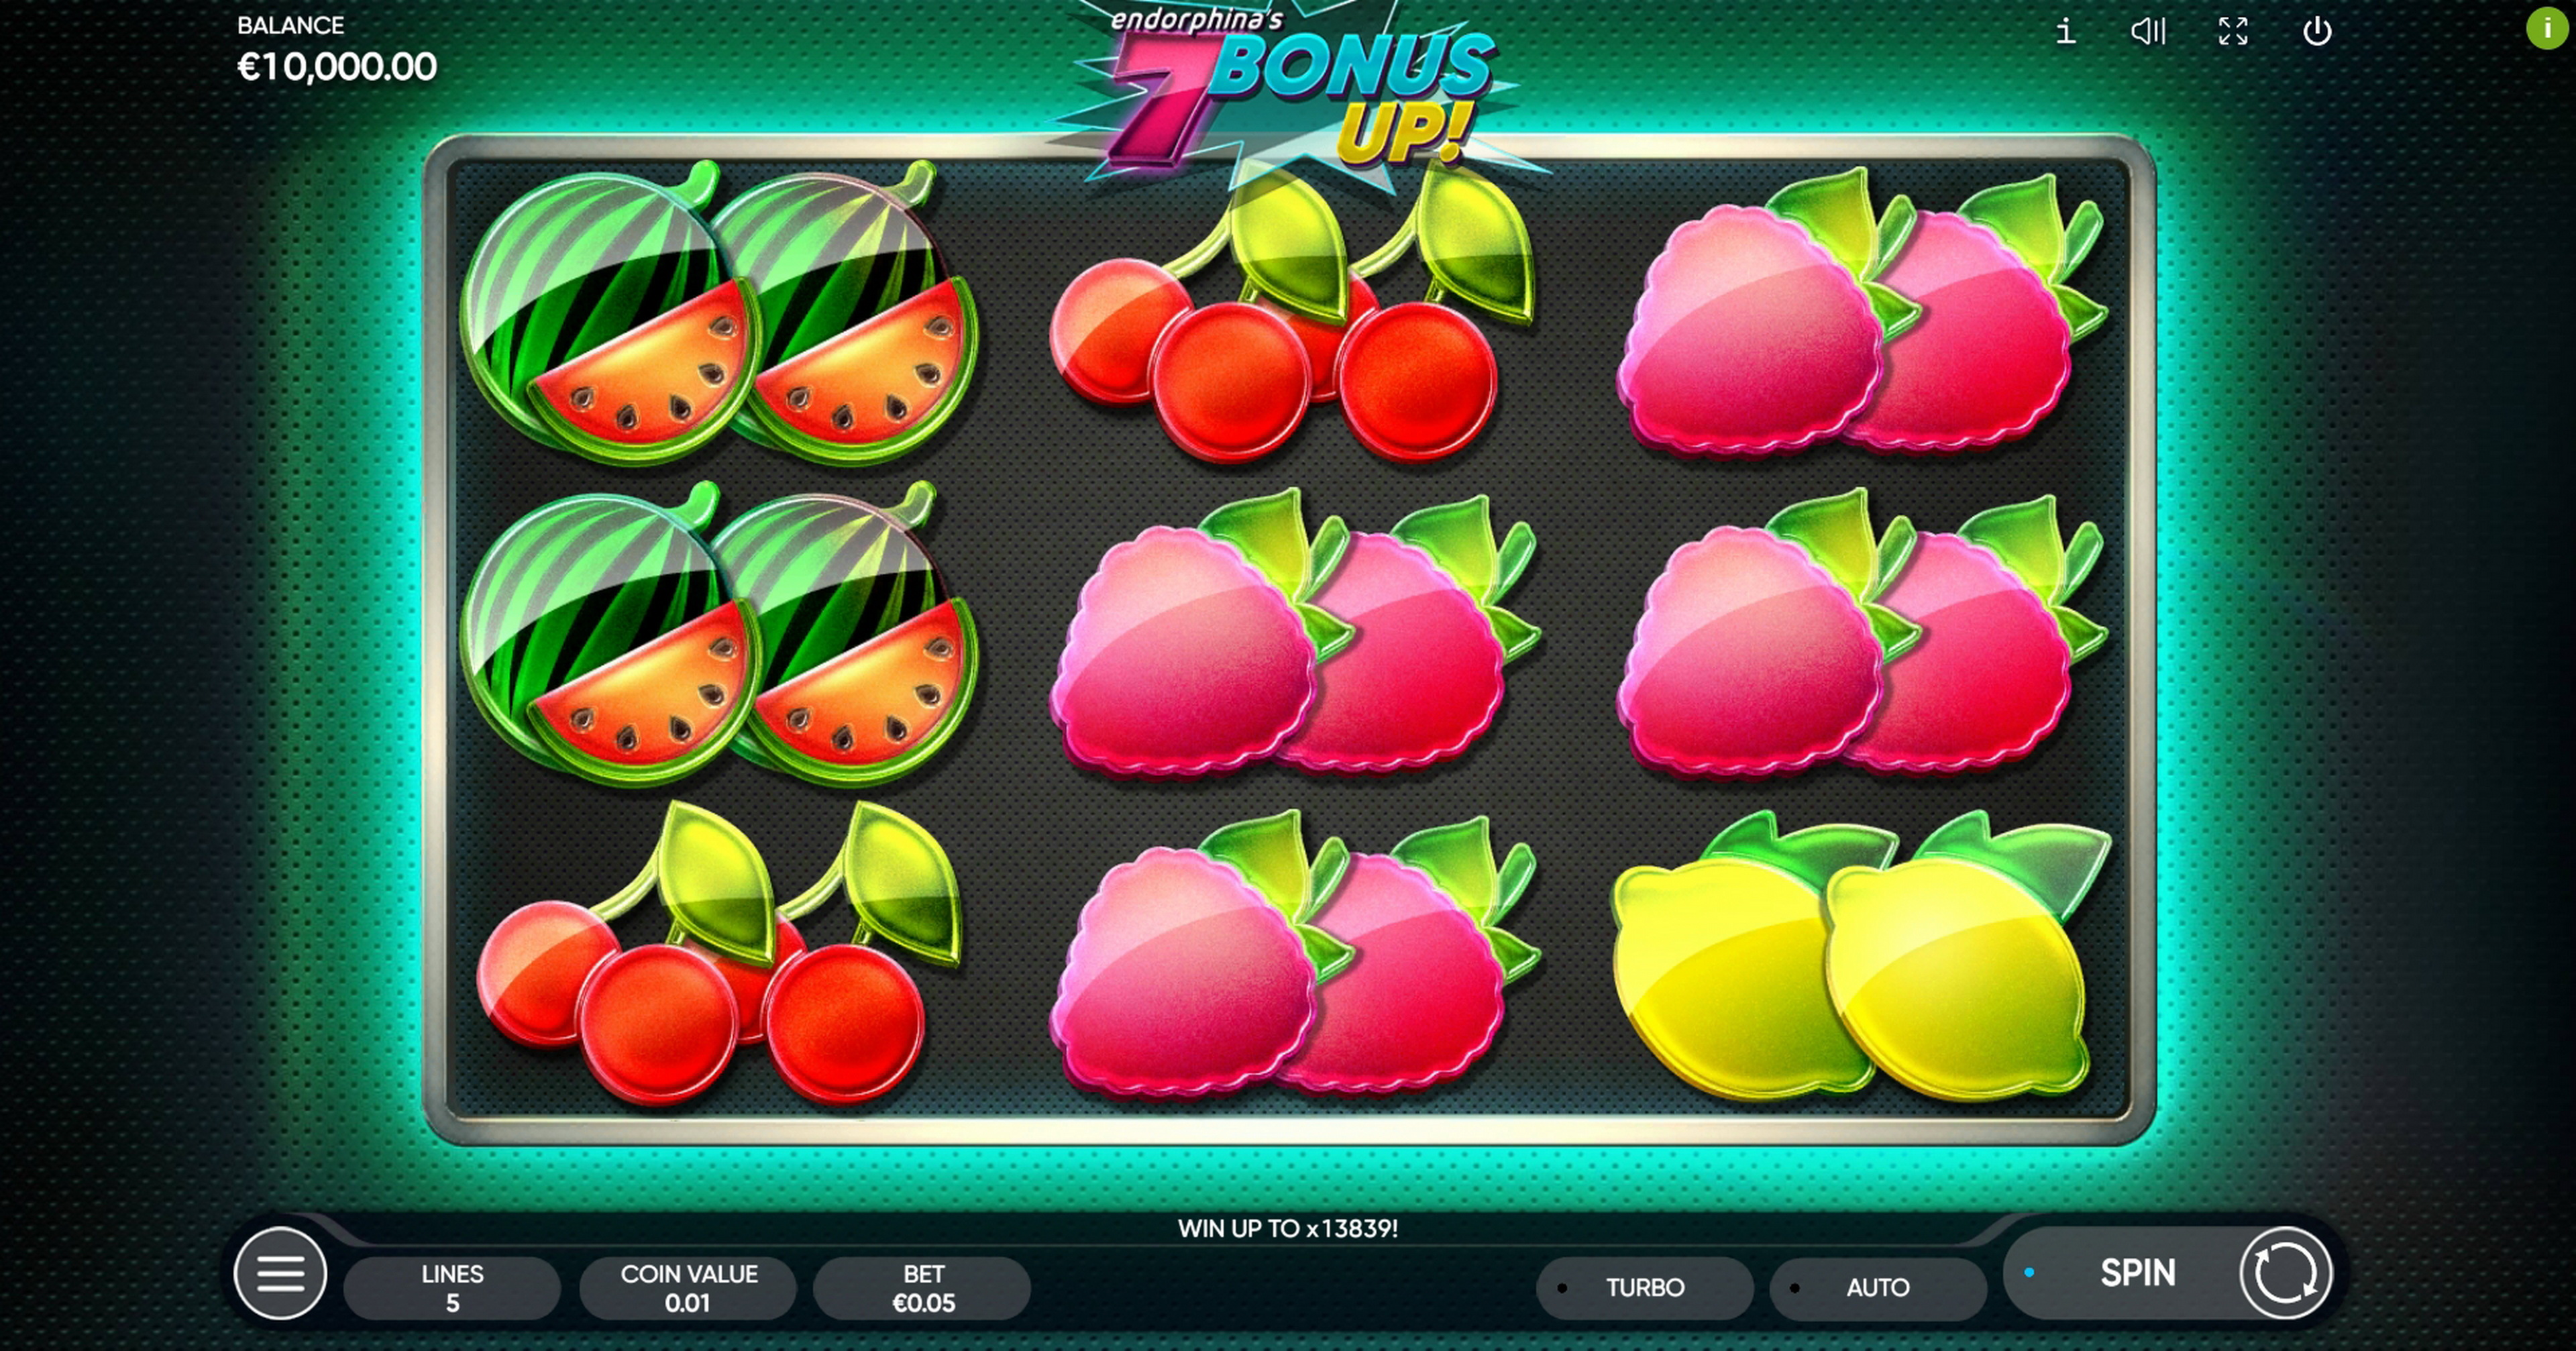 Reels in 7 Bonus Up Slot Game by Endorphina